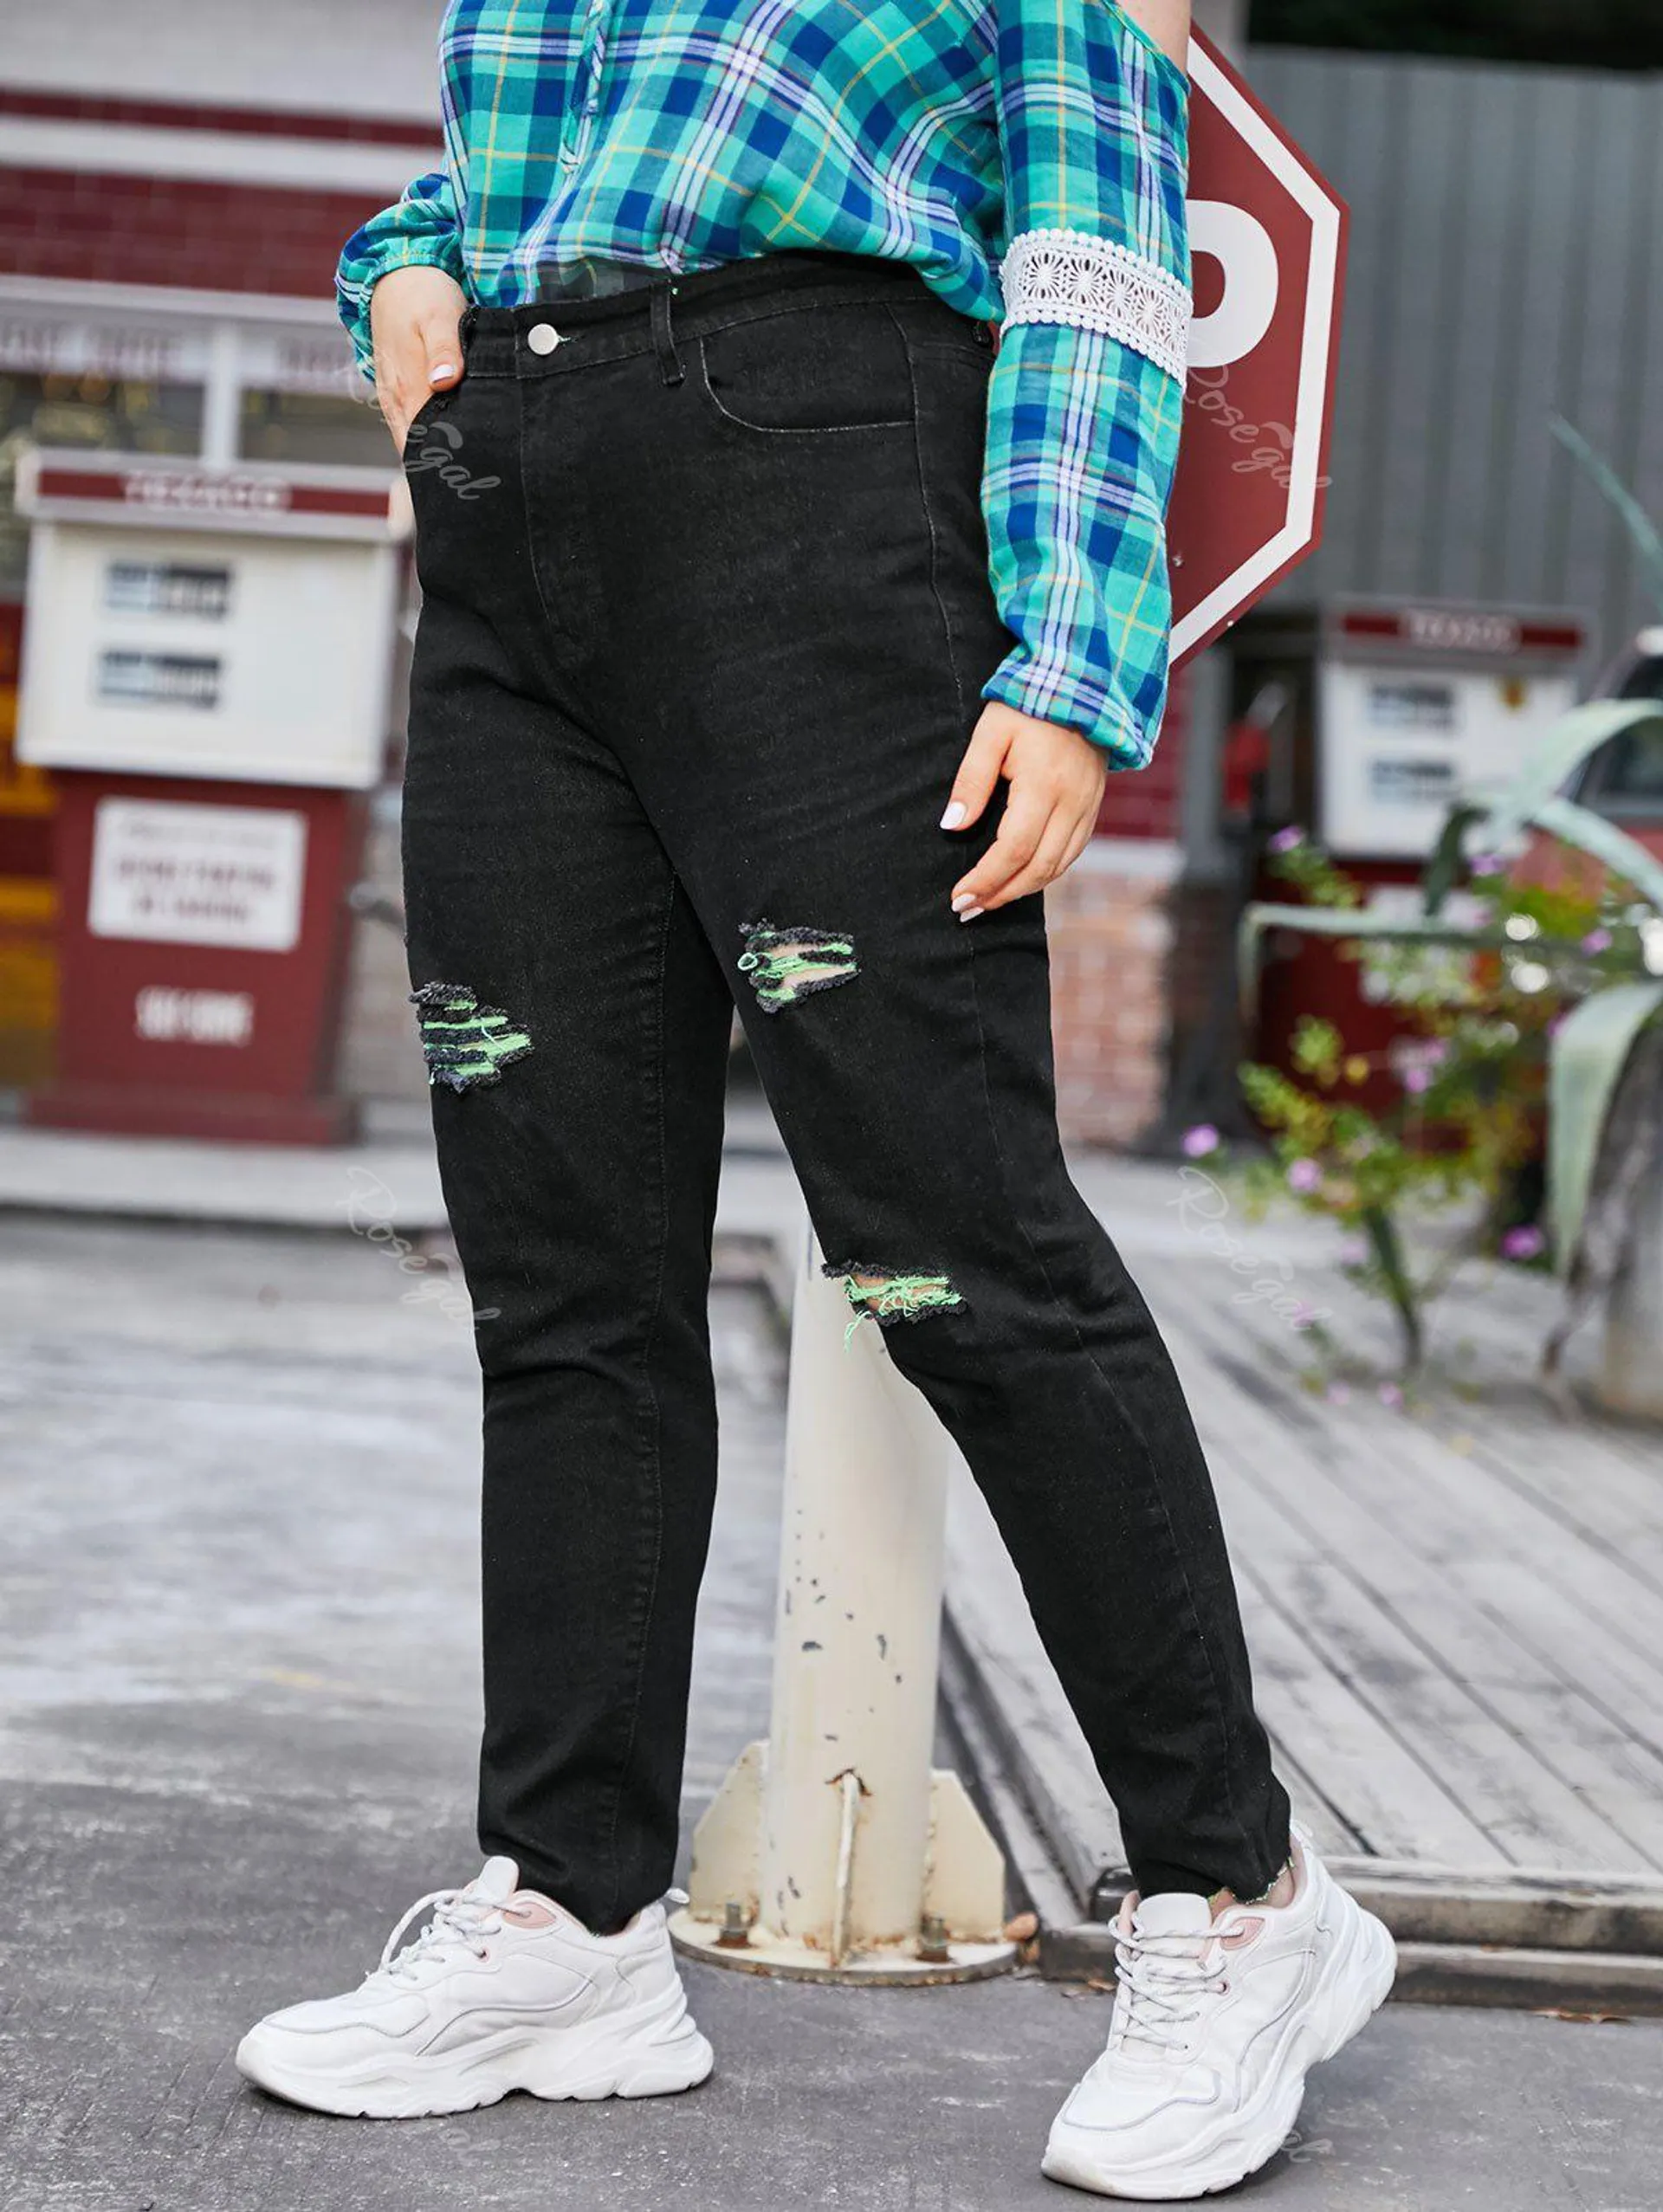 Contrast Distressed Raw Hem Plus Size Tapered Jeans - 1x